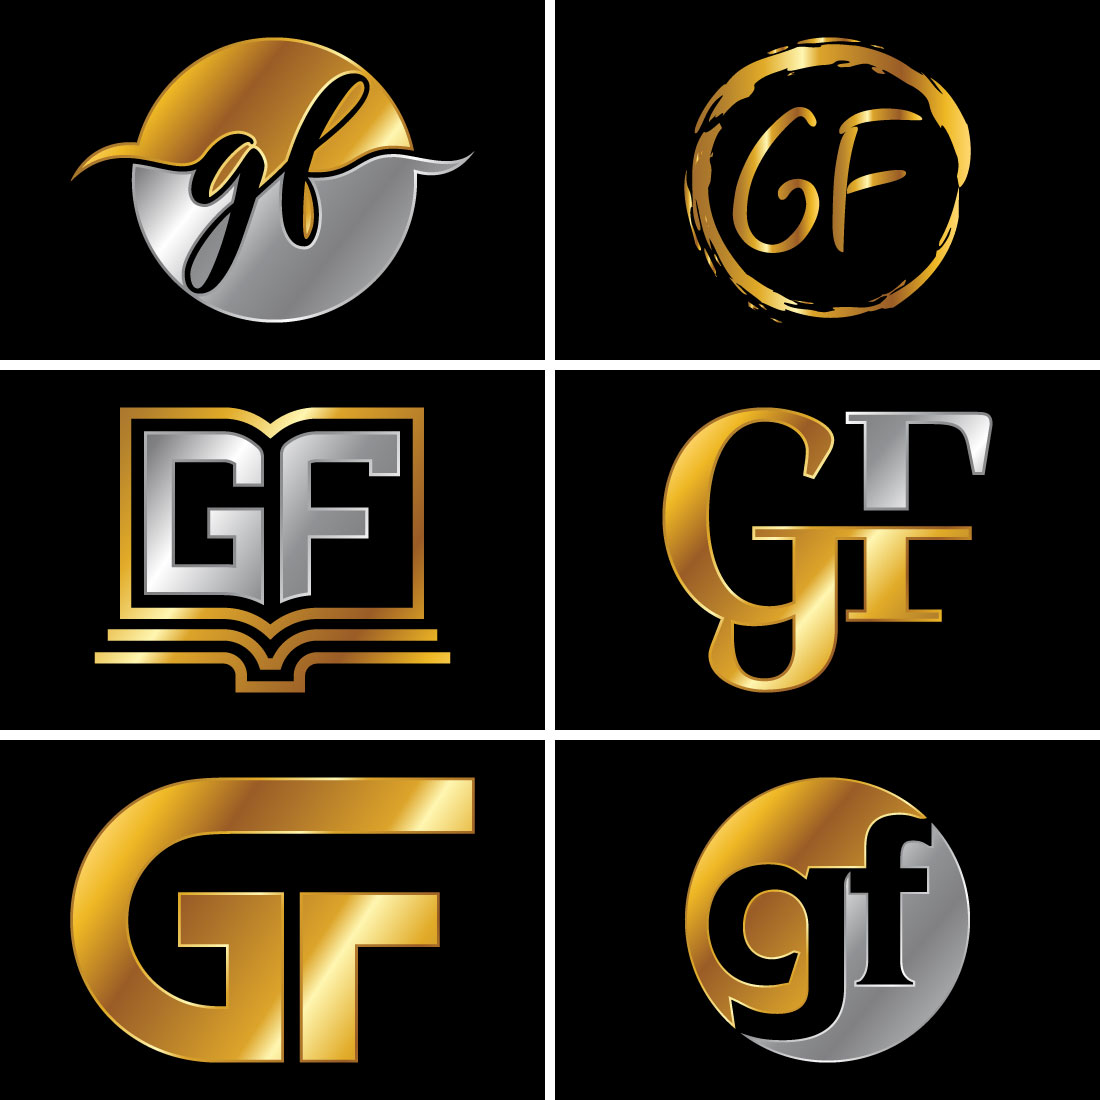 Gf logo Vectors & Illustrations for Free Download | Freepik